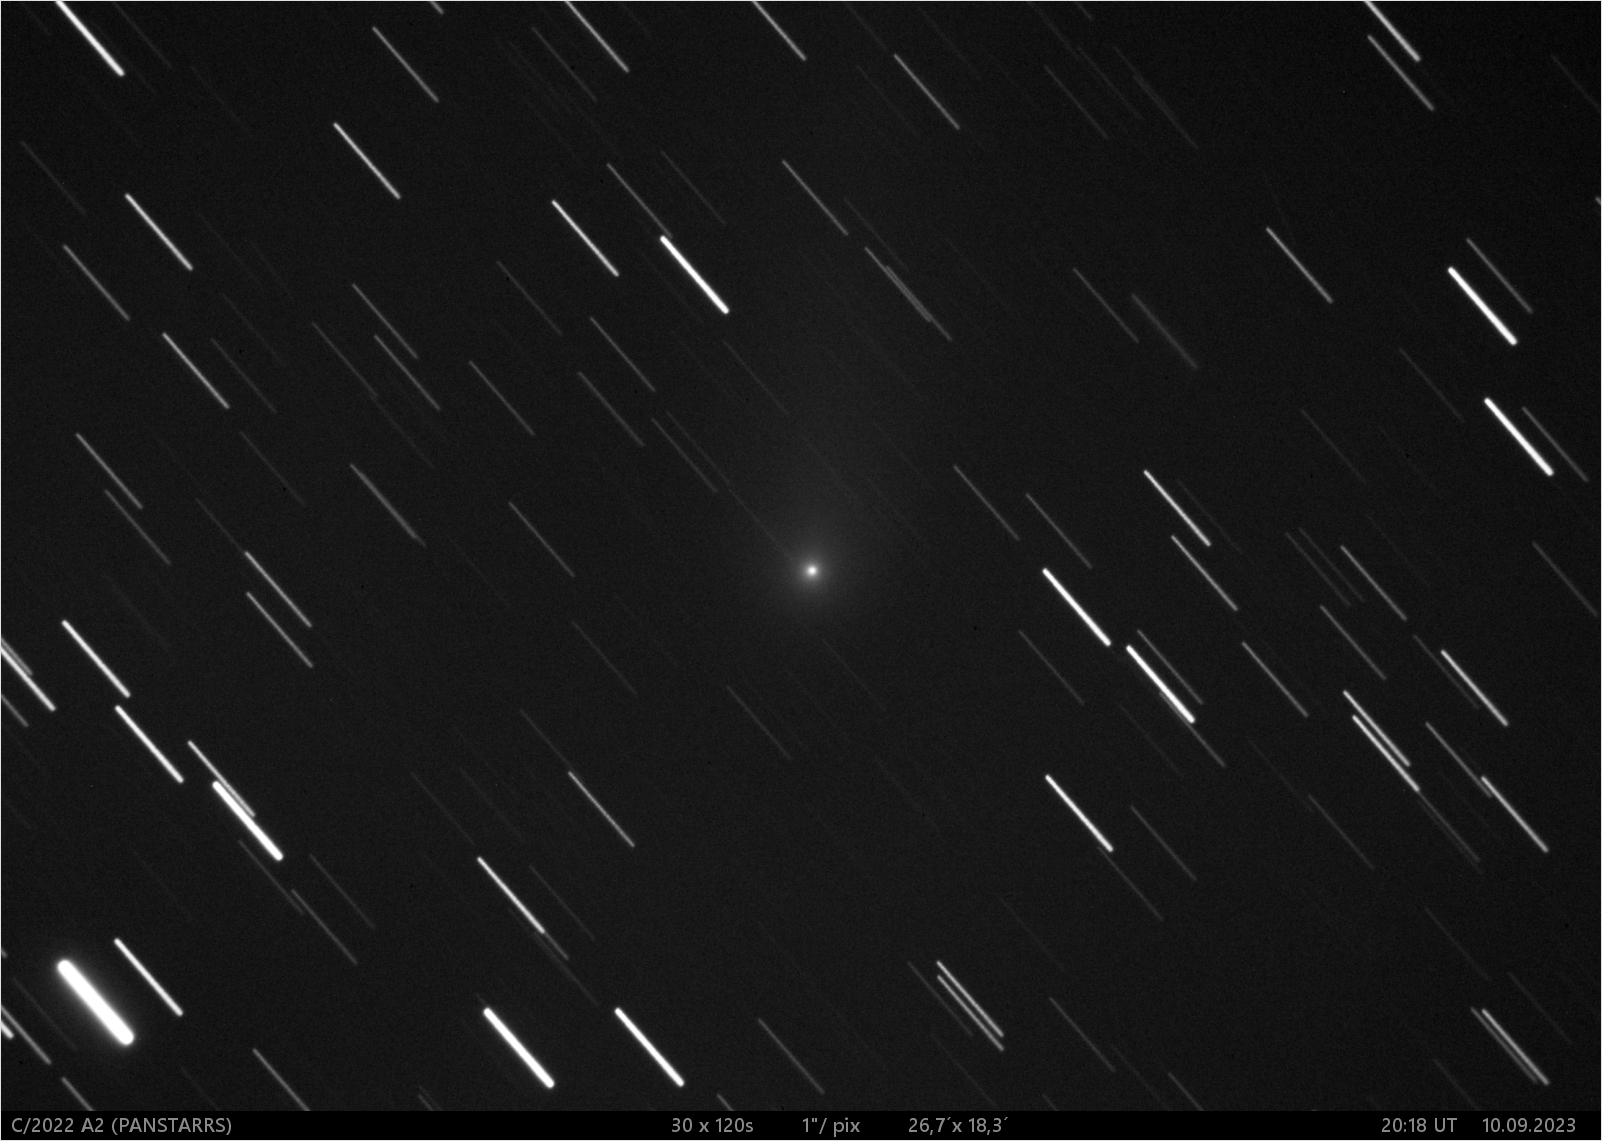 kometa C/2022 A2 (PANSTRRS)